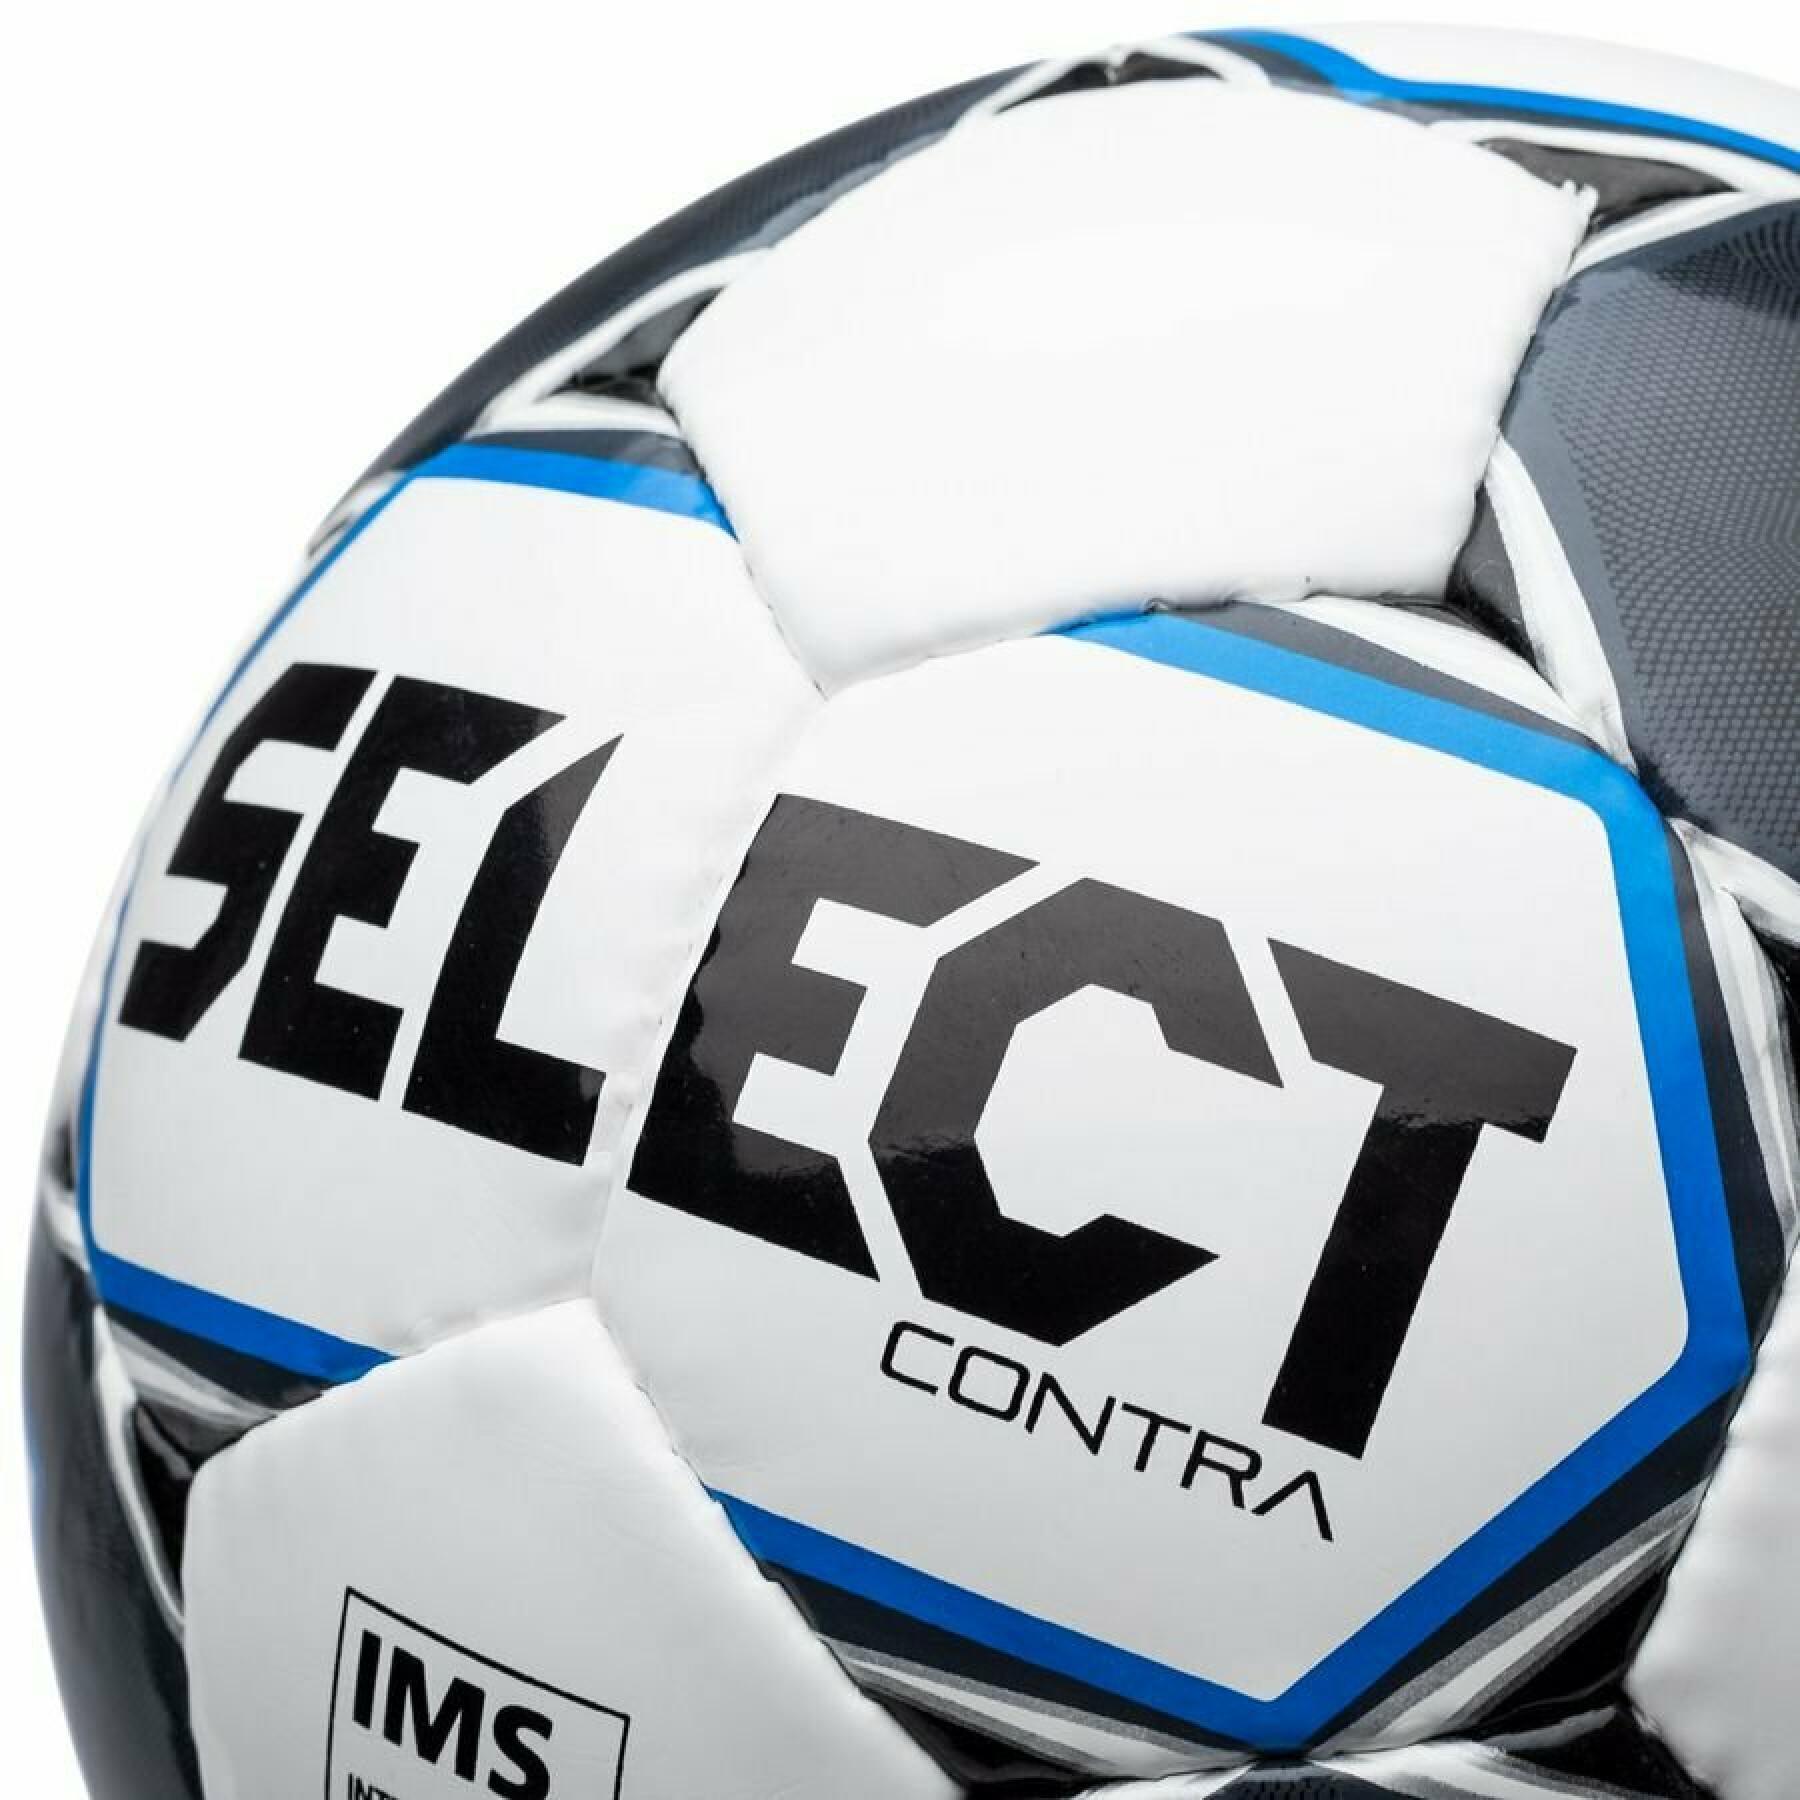 Select Contra FIFA IMS